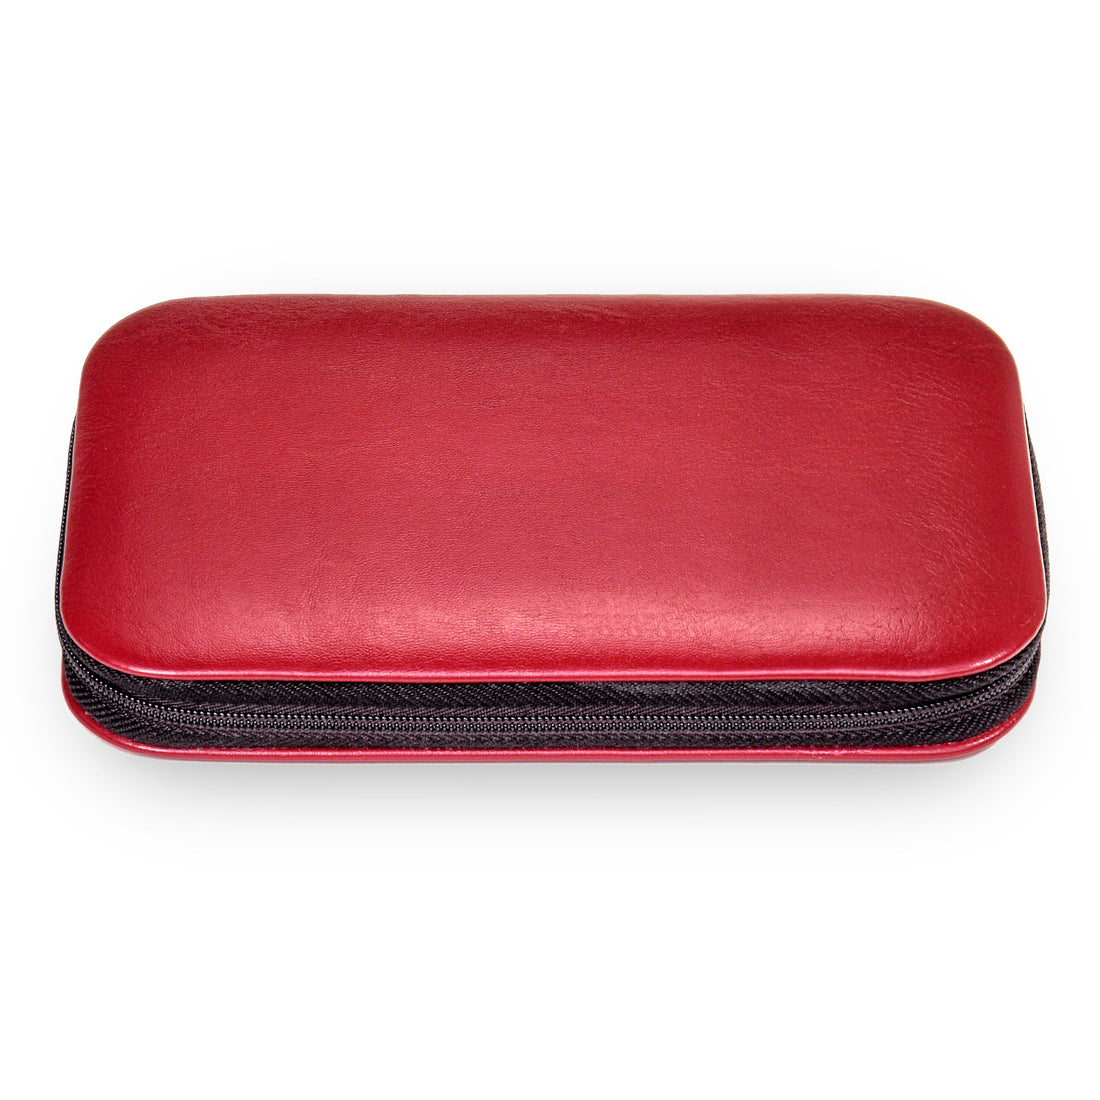 10 pcs. manicure set Manikürenset / red (leather)